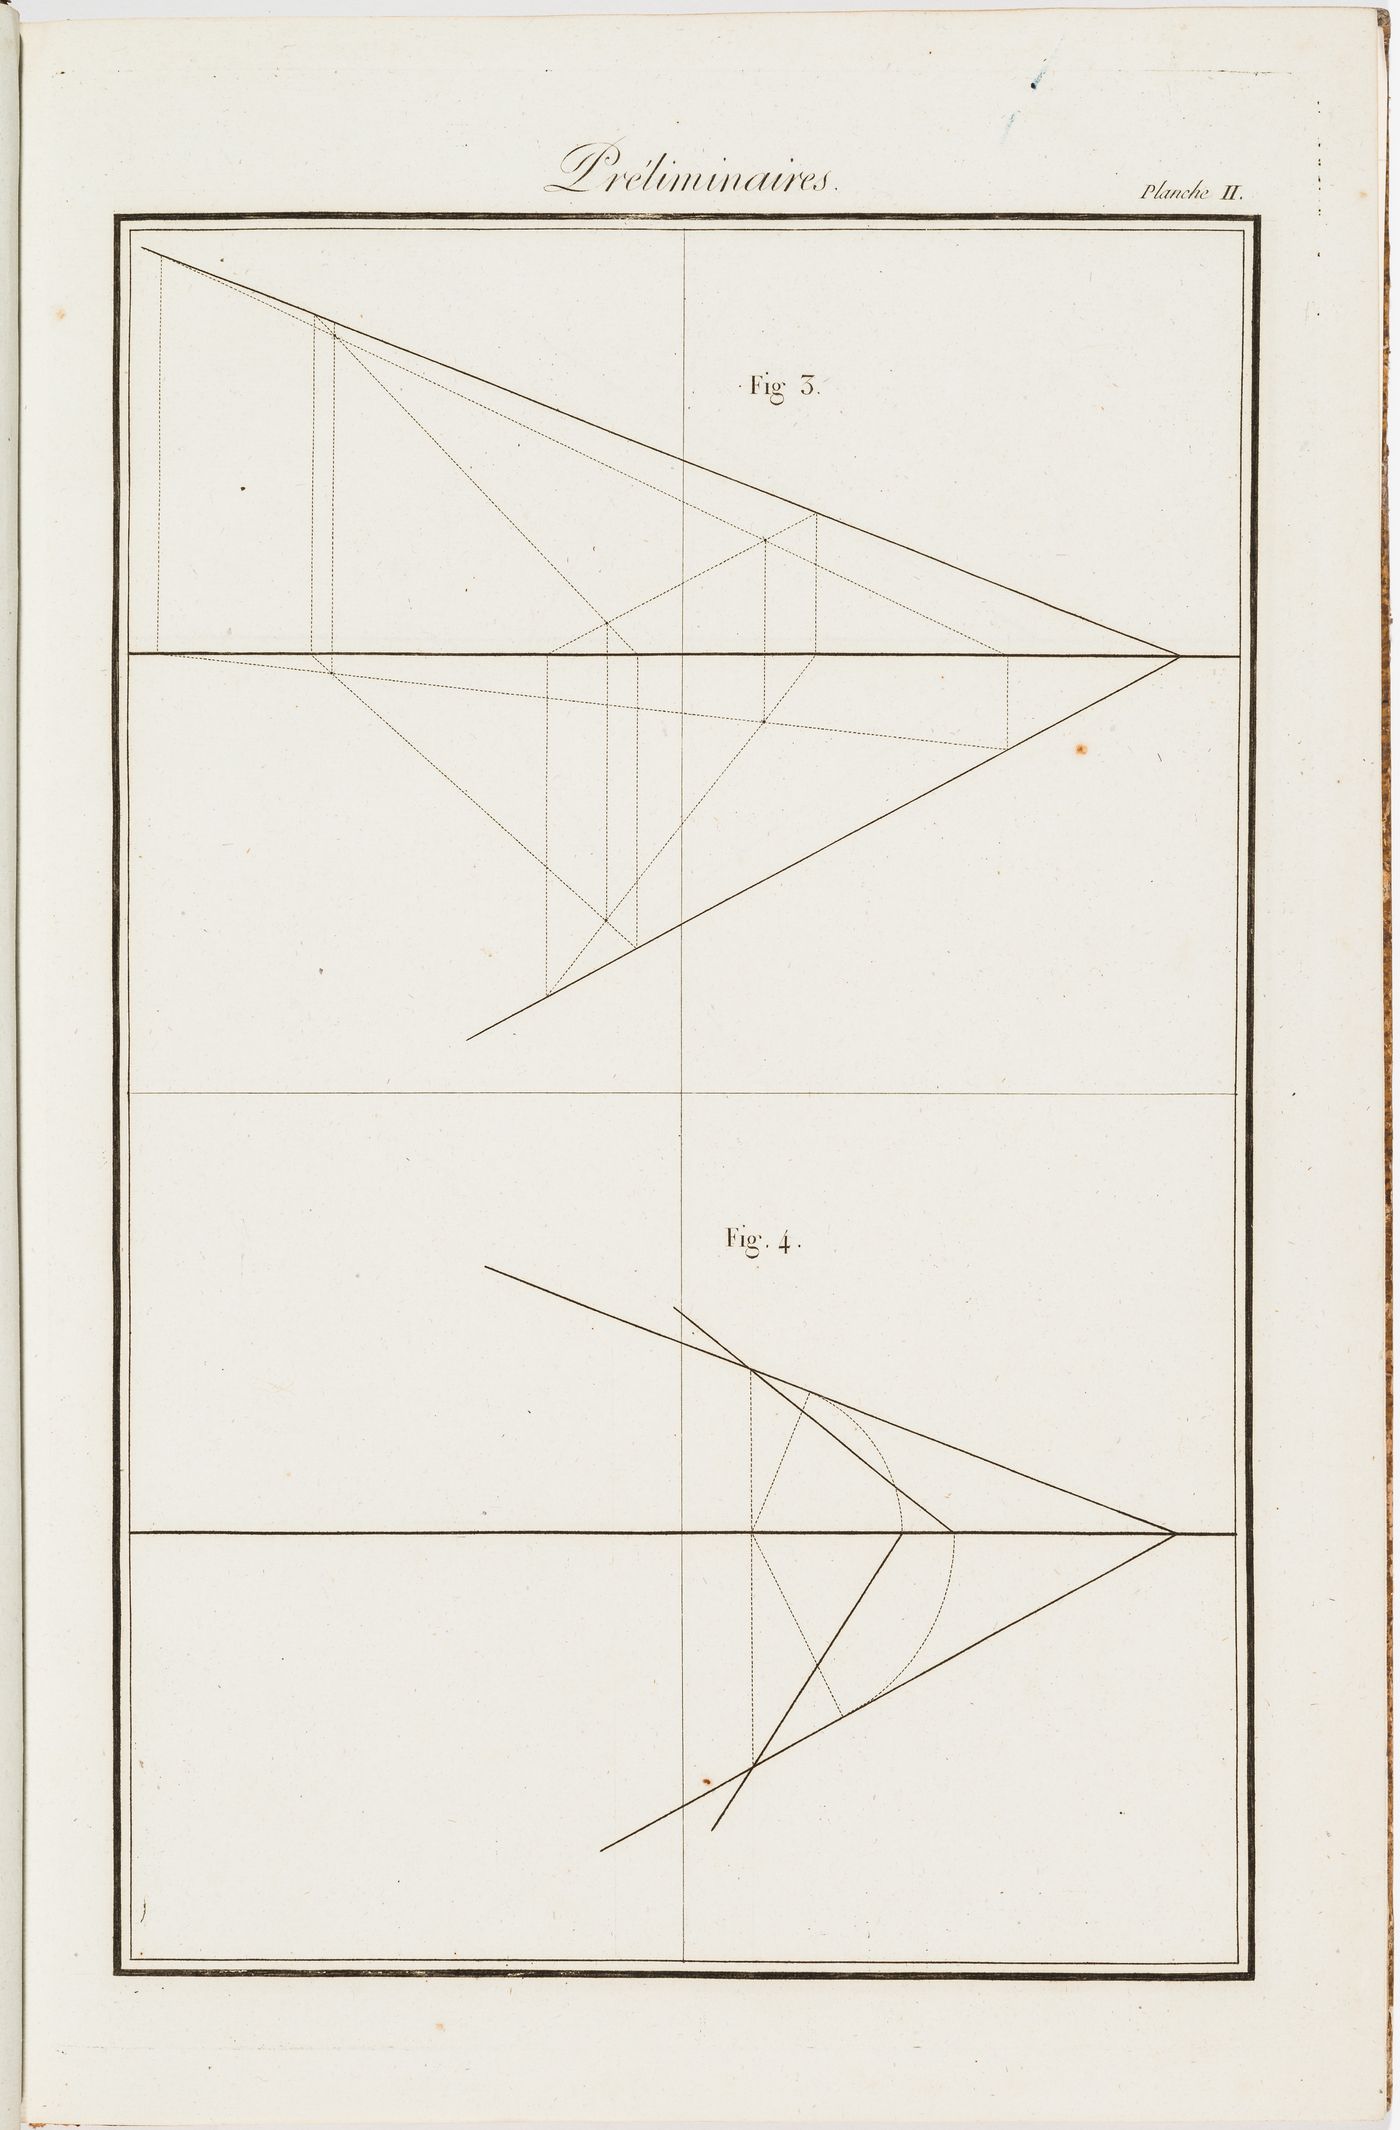 "Préliminaires": two geometry exercises